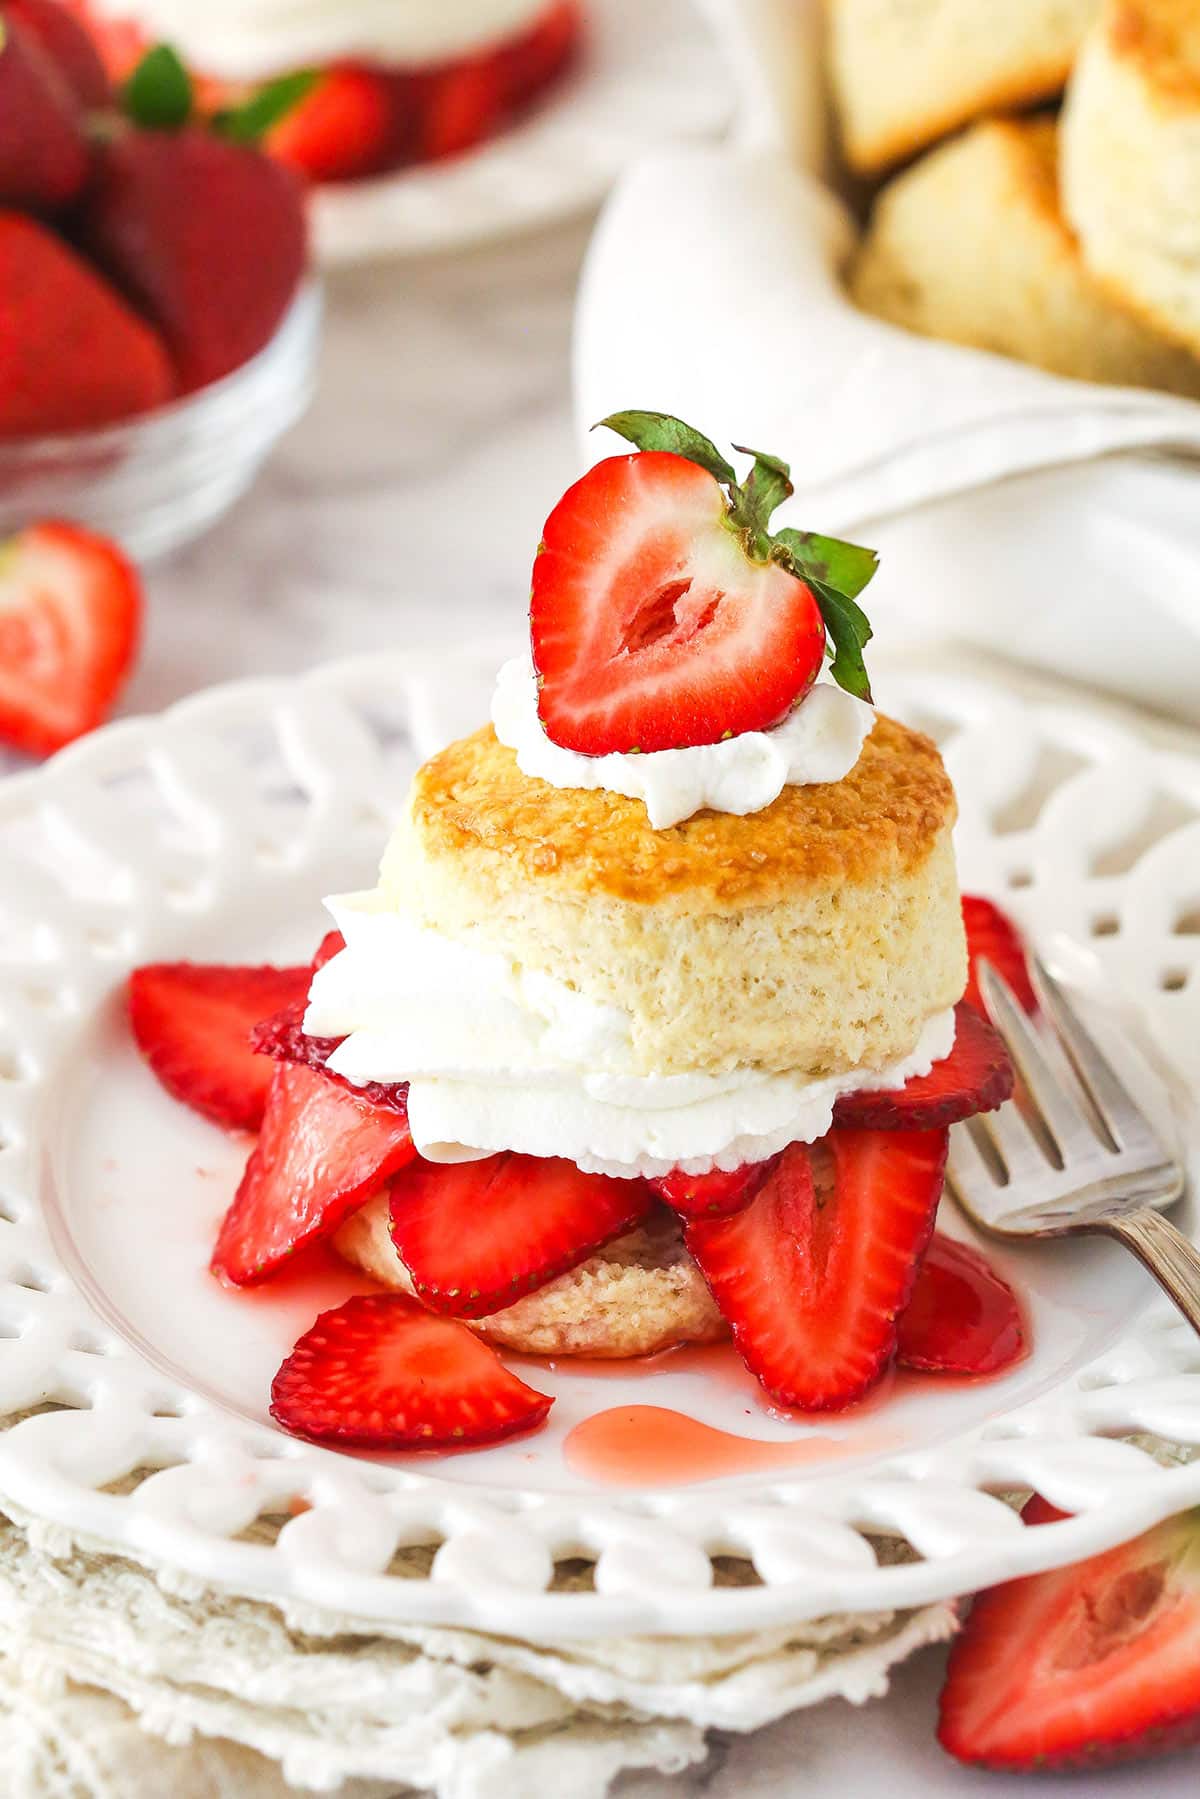 Strawberry shortcake served on a plate.